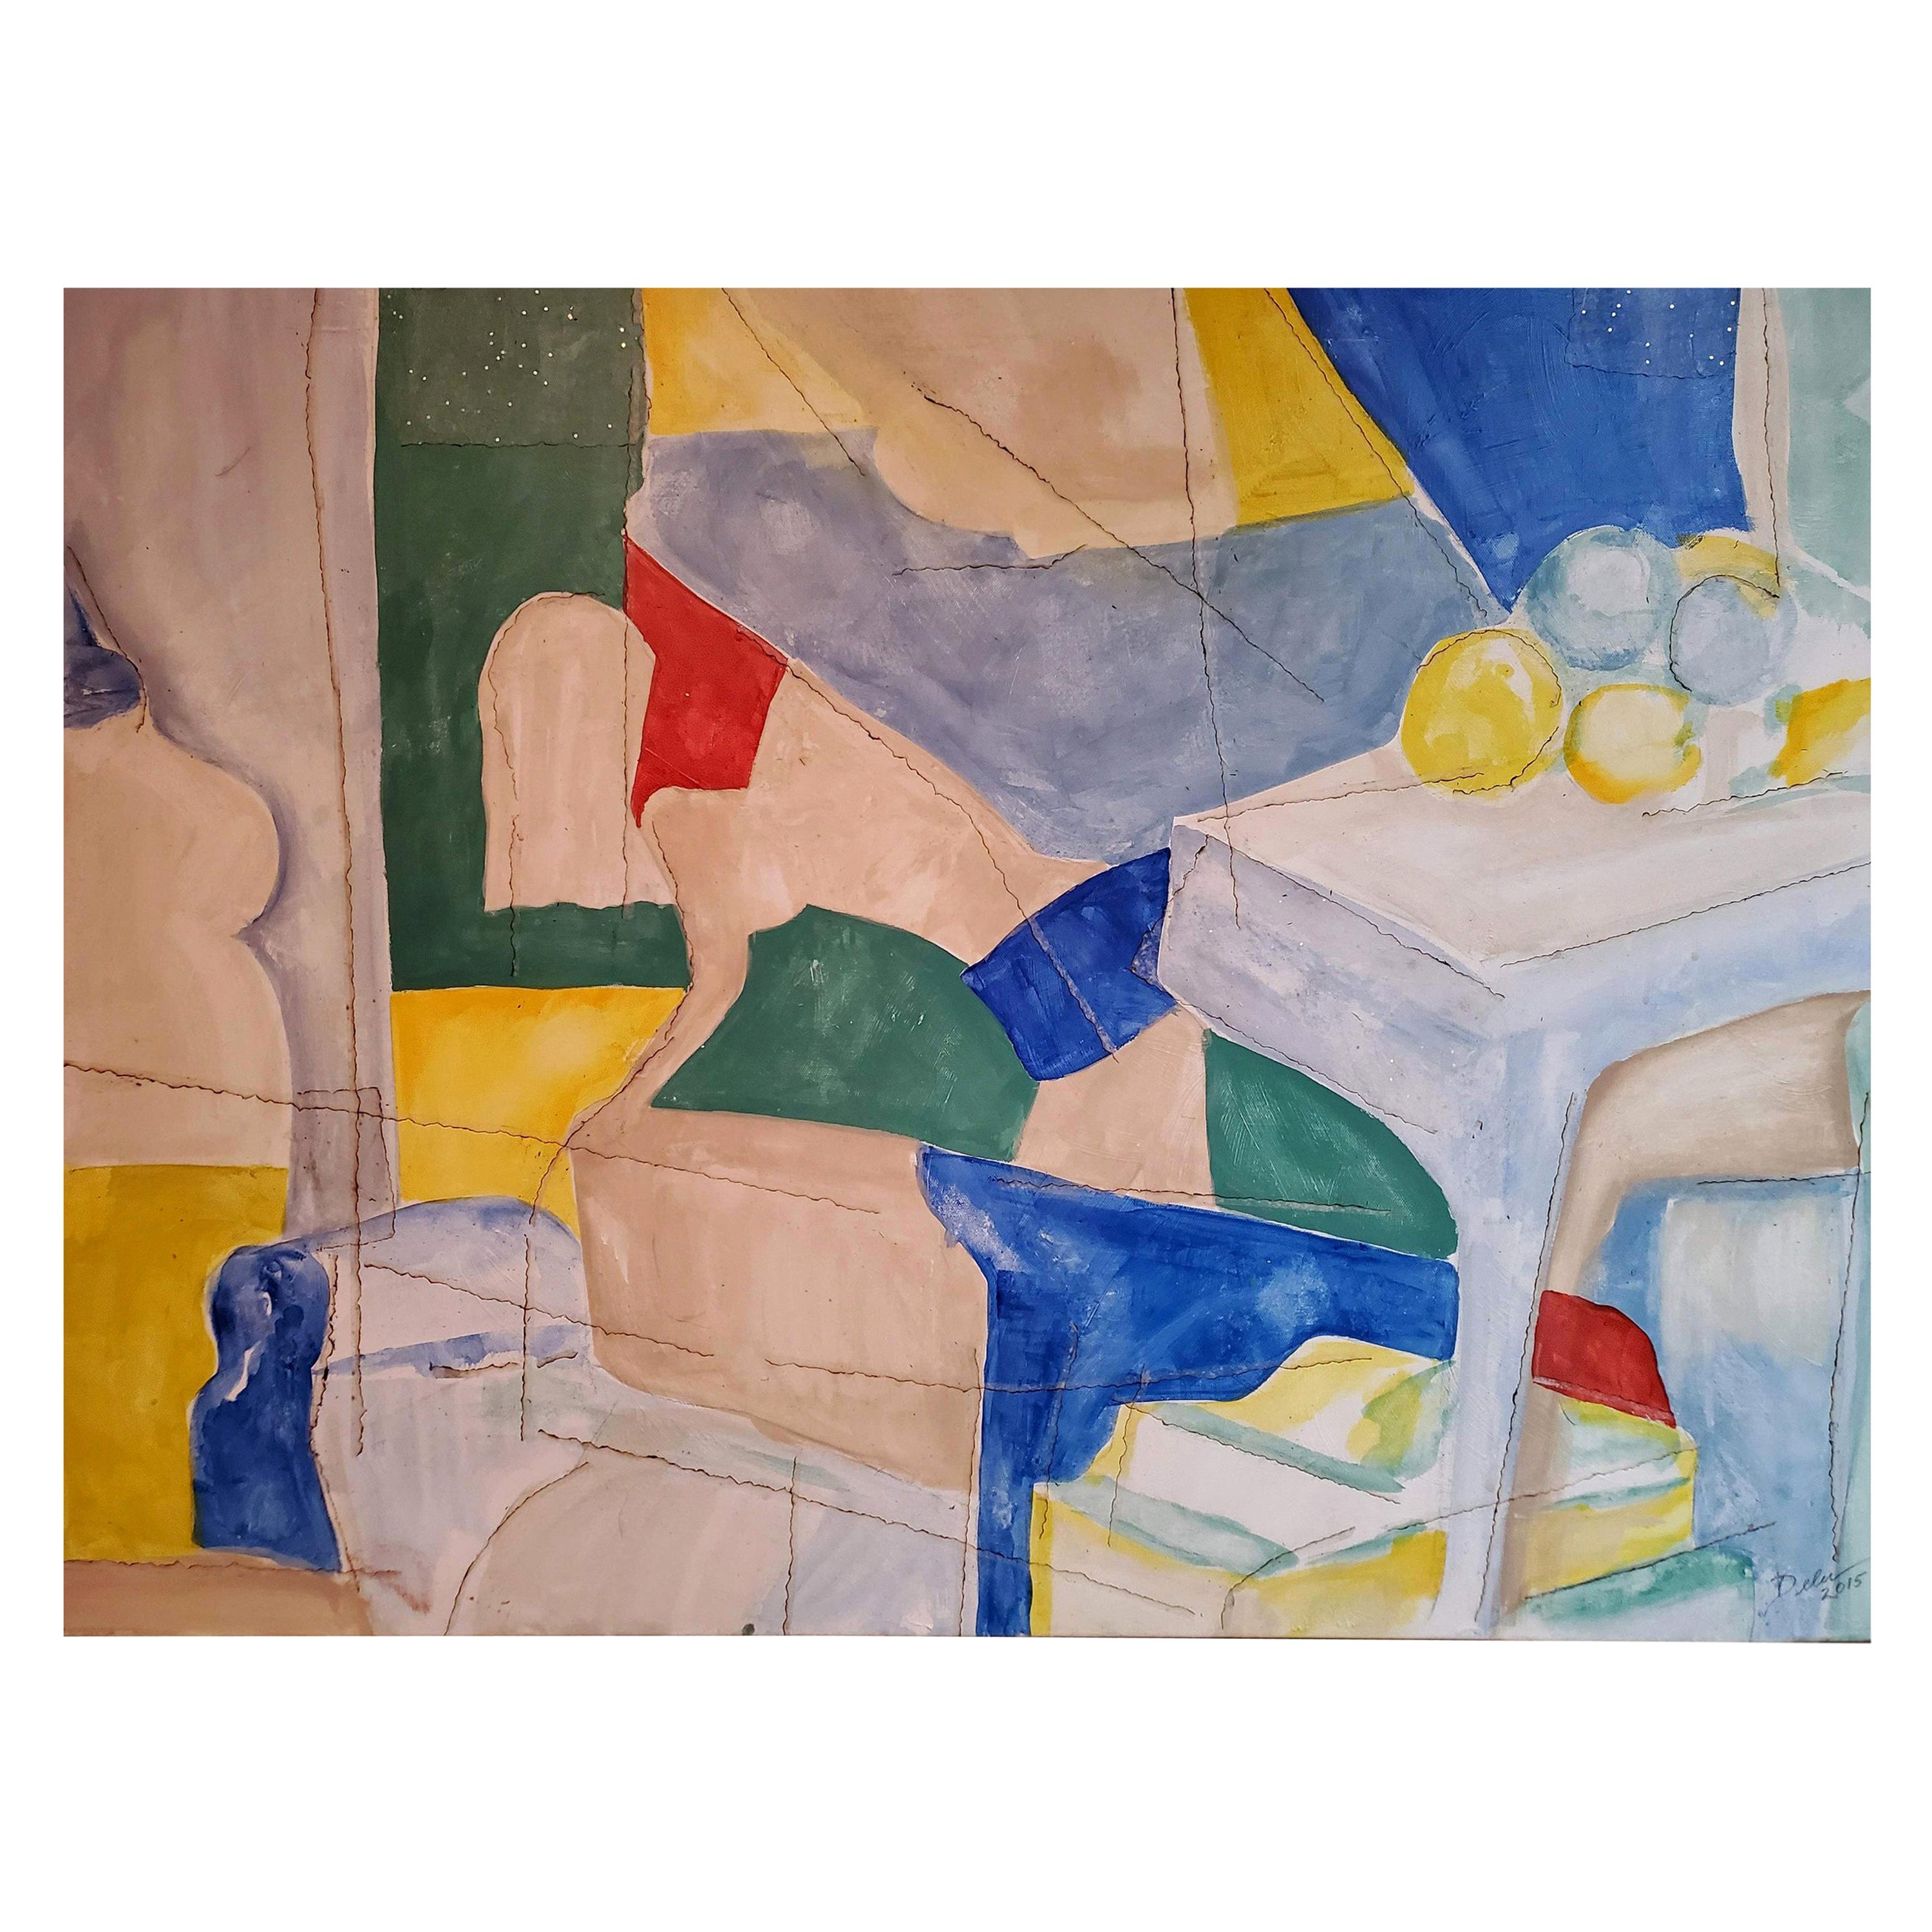 "Elusion II" Peinture abstraite technique mixte bleue, verte, jaune et rouge sur toile